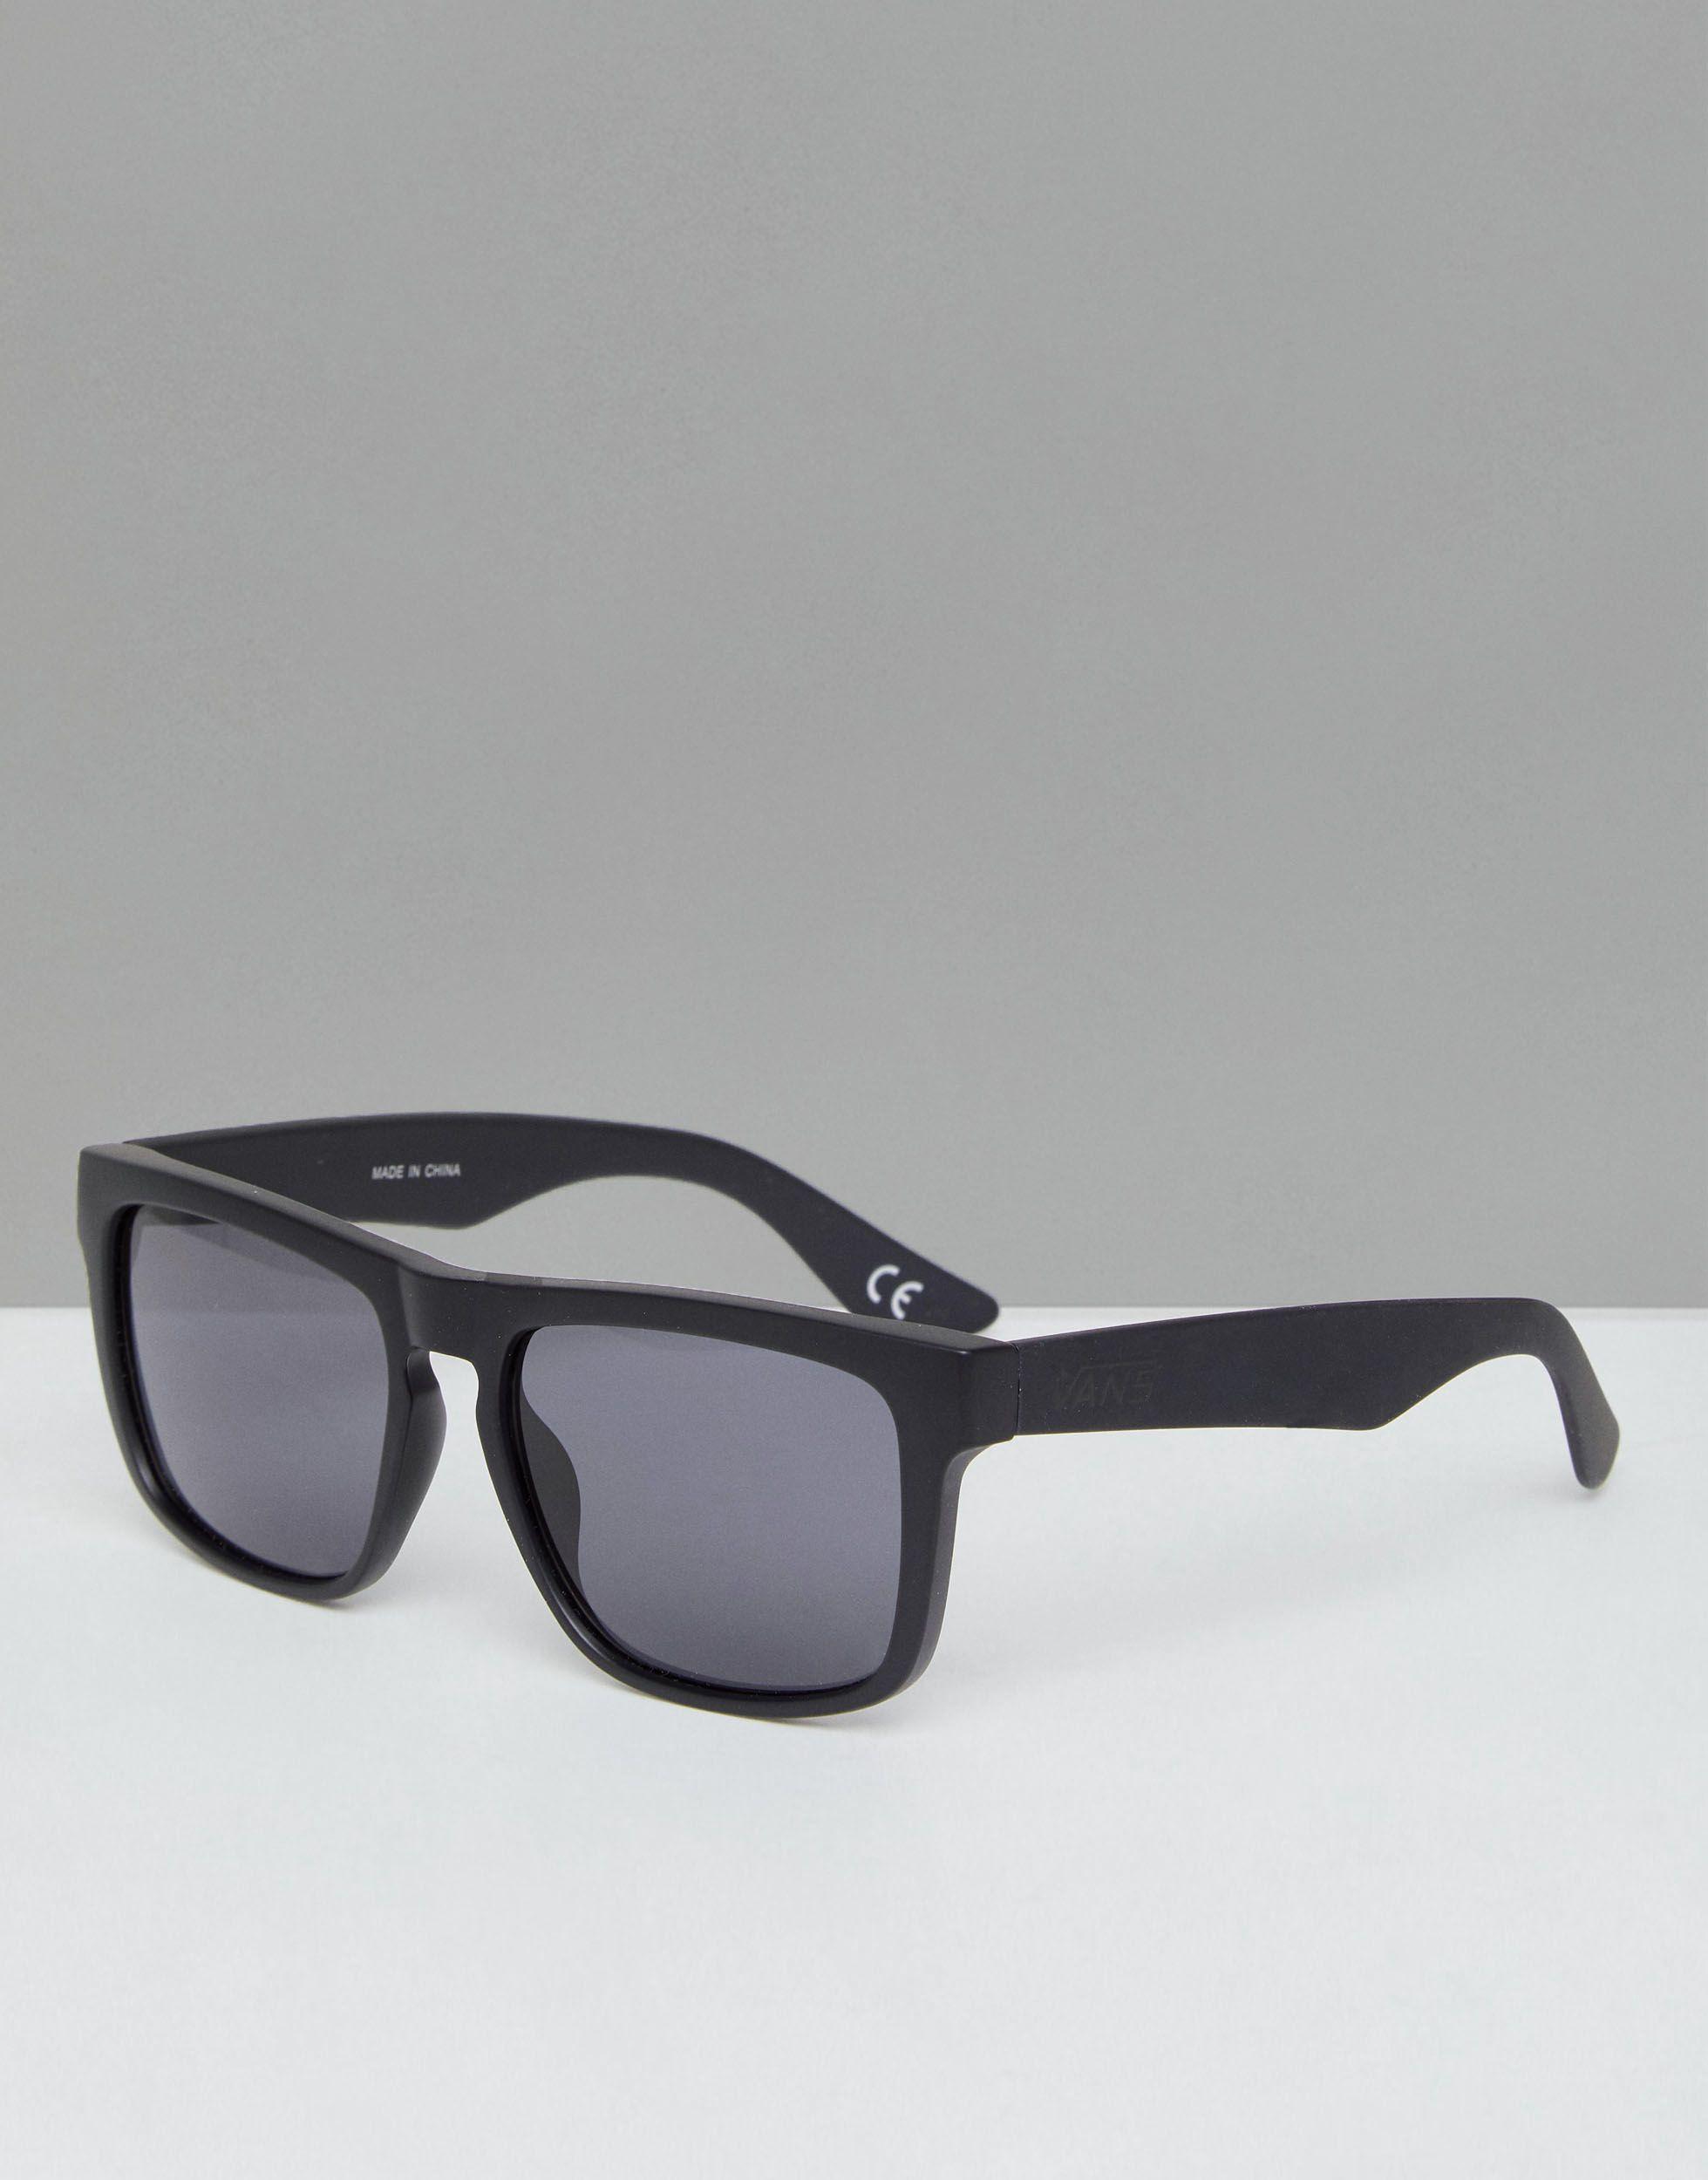 Off for | Sunglasses in Lyst Squared Black Vans Men